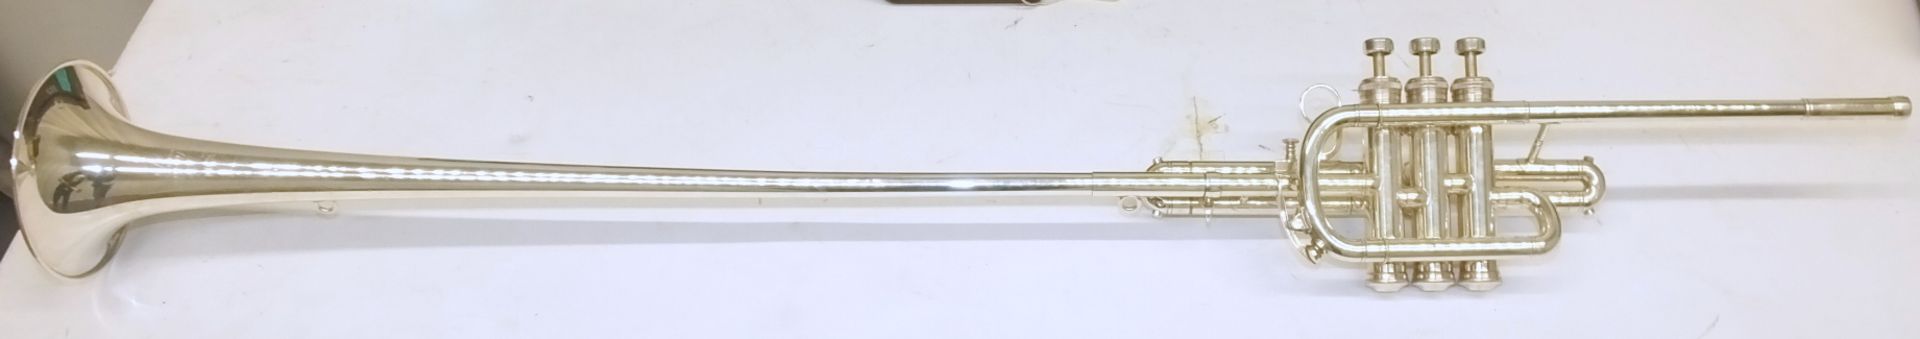 Besson International Fanfare Trumpet in case - Serial Number - 706 - 821387 - Image 6 of 8